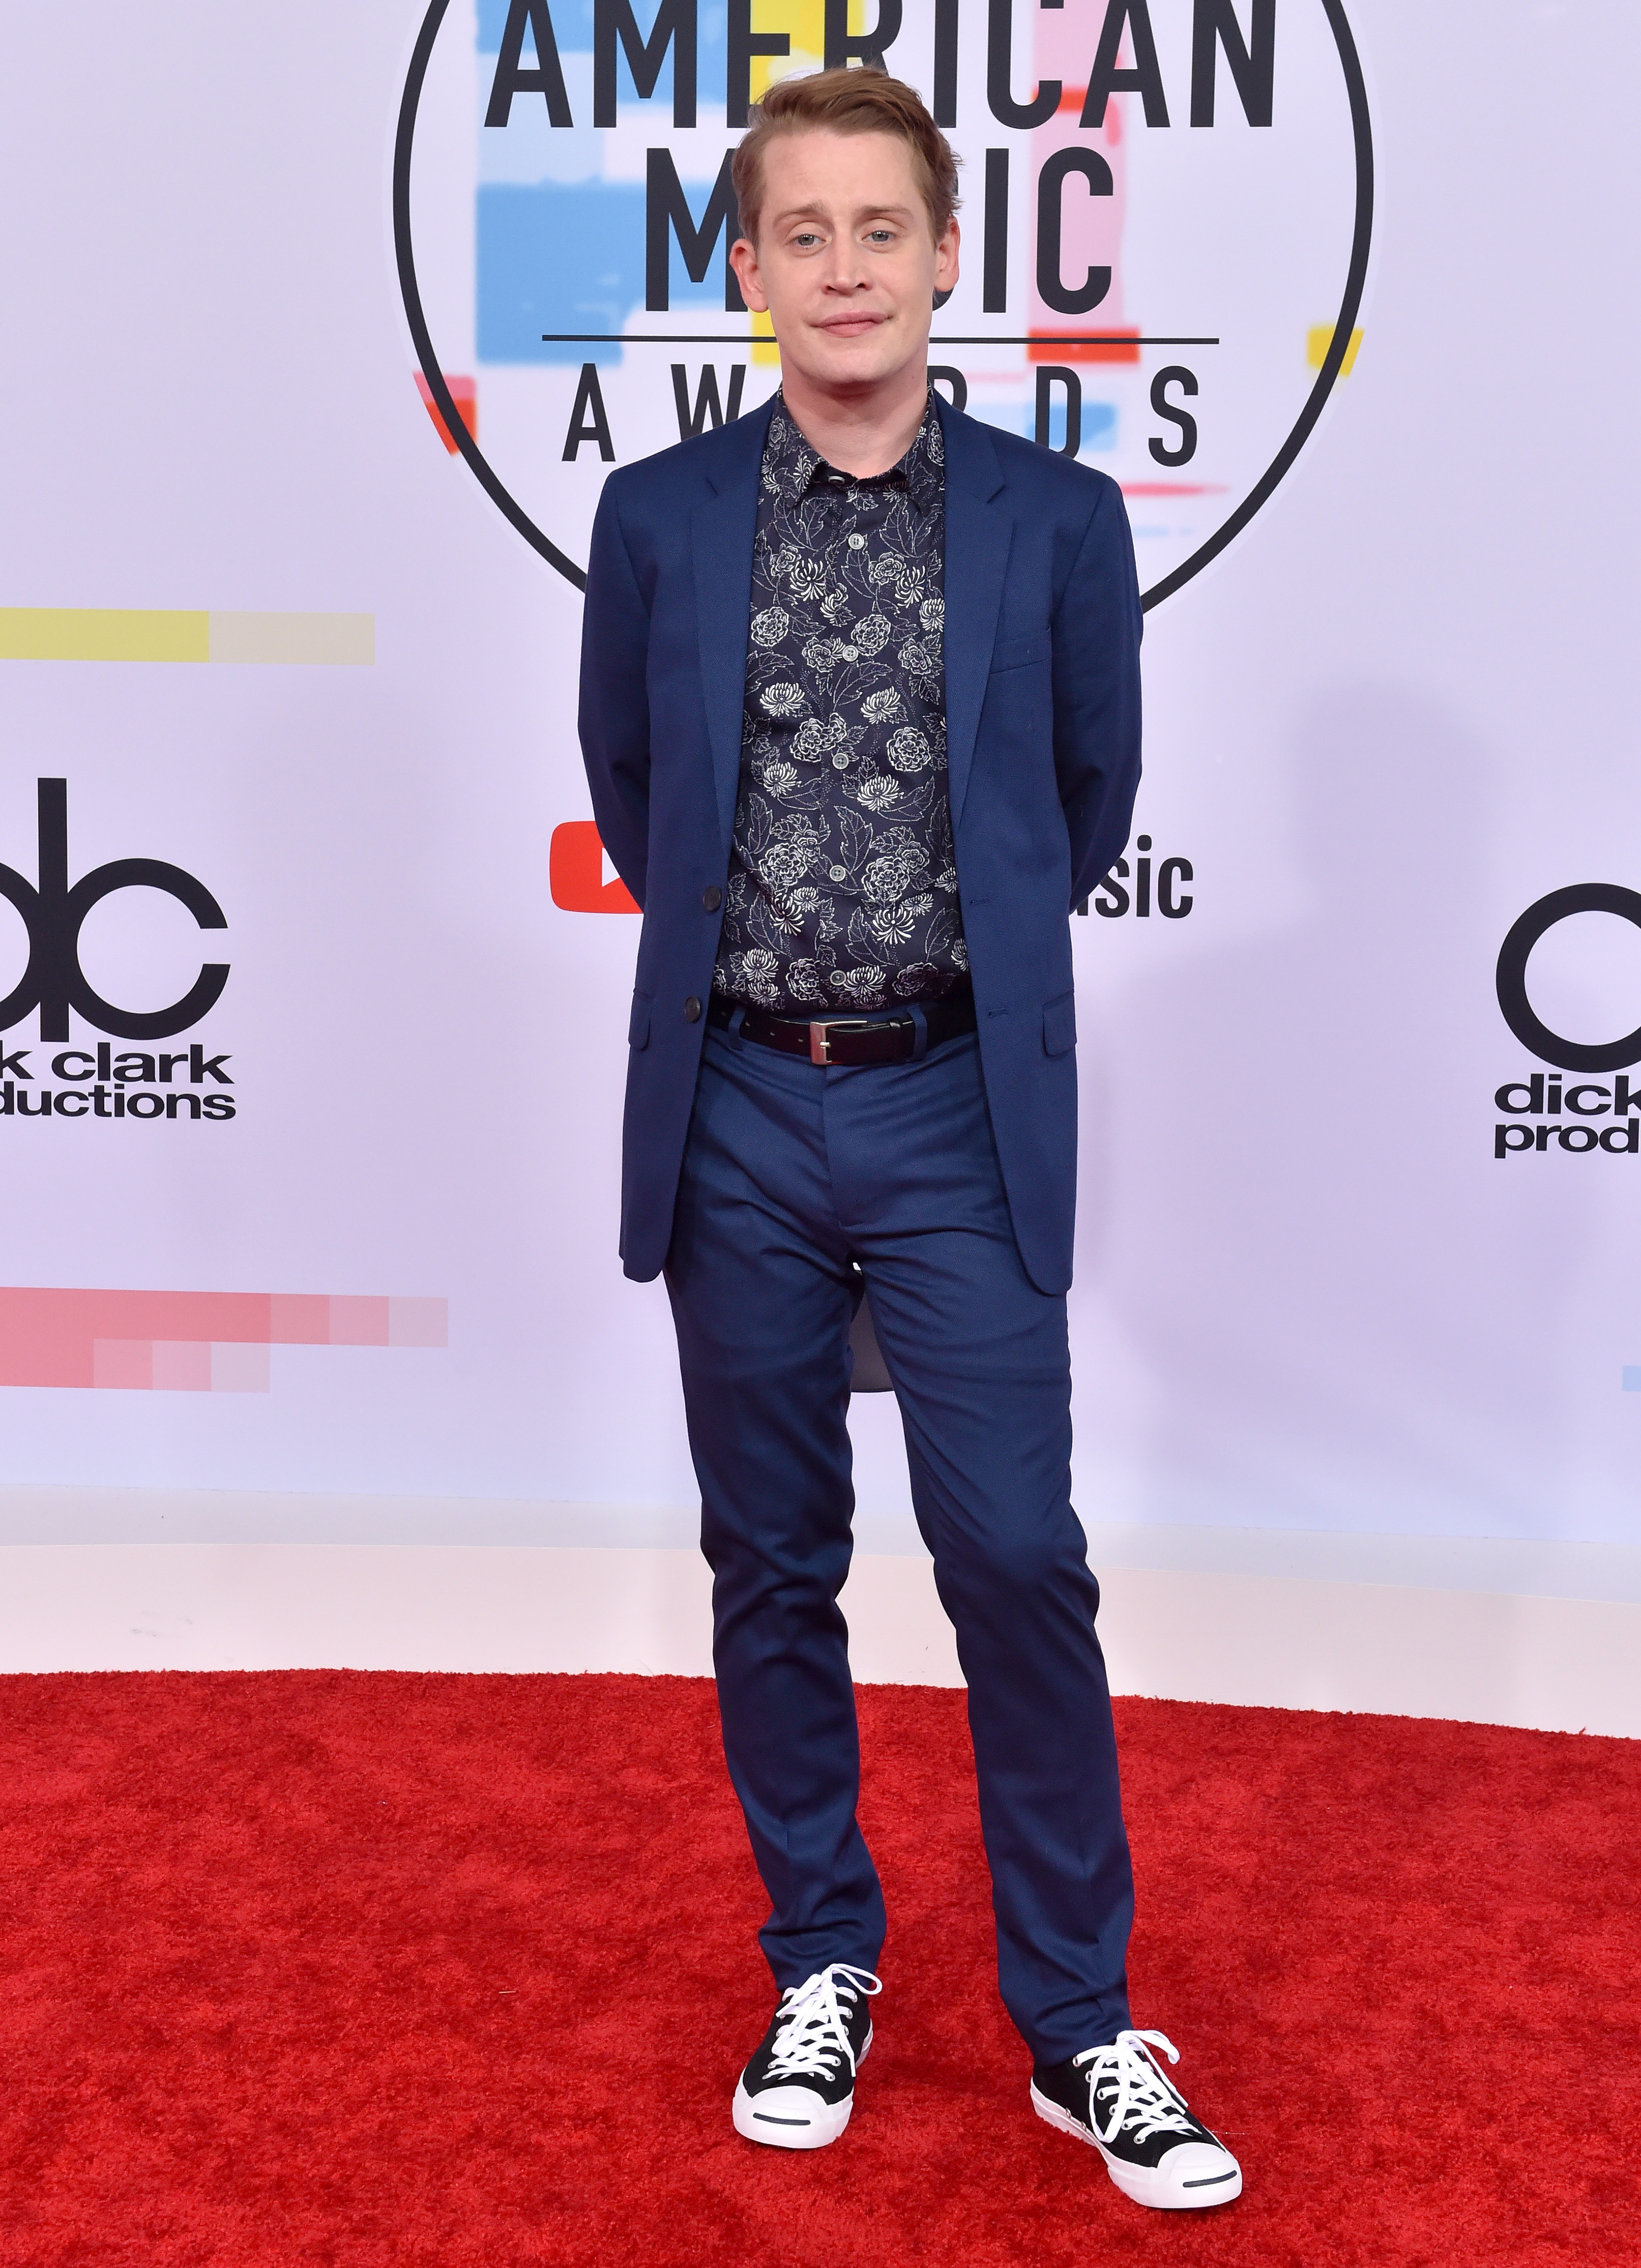 Macaulay Culkin bei den American Music Awards in Los Angeles, Kalifornien am 9. Oktober 2018 | Quelle: Getty Images